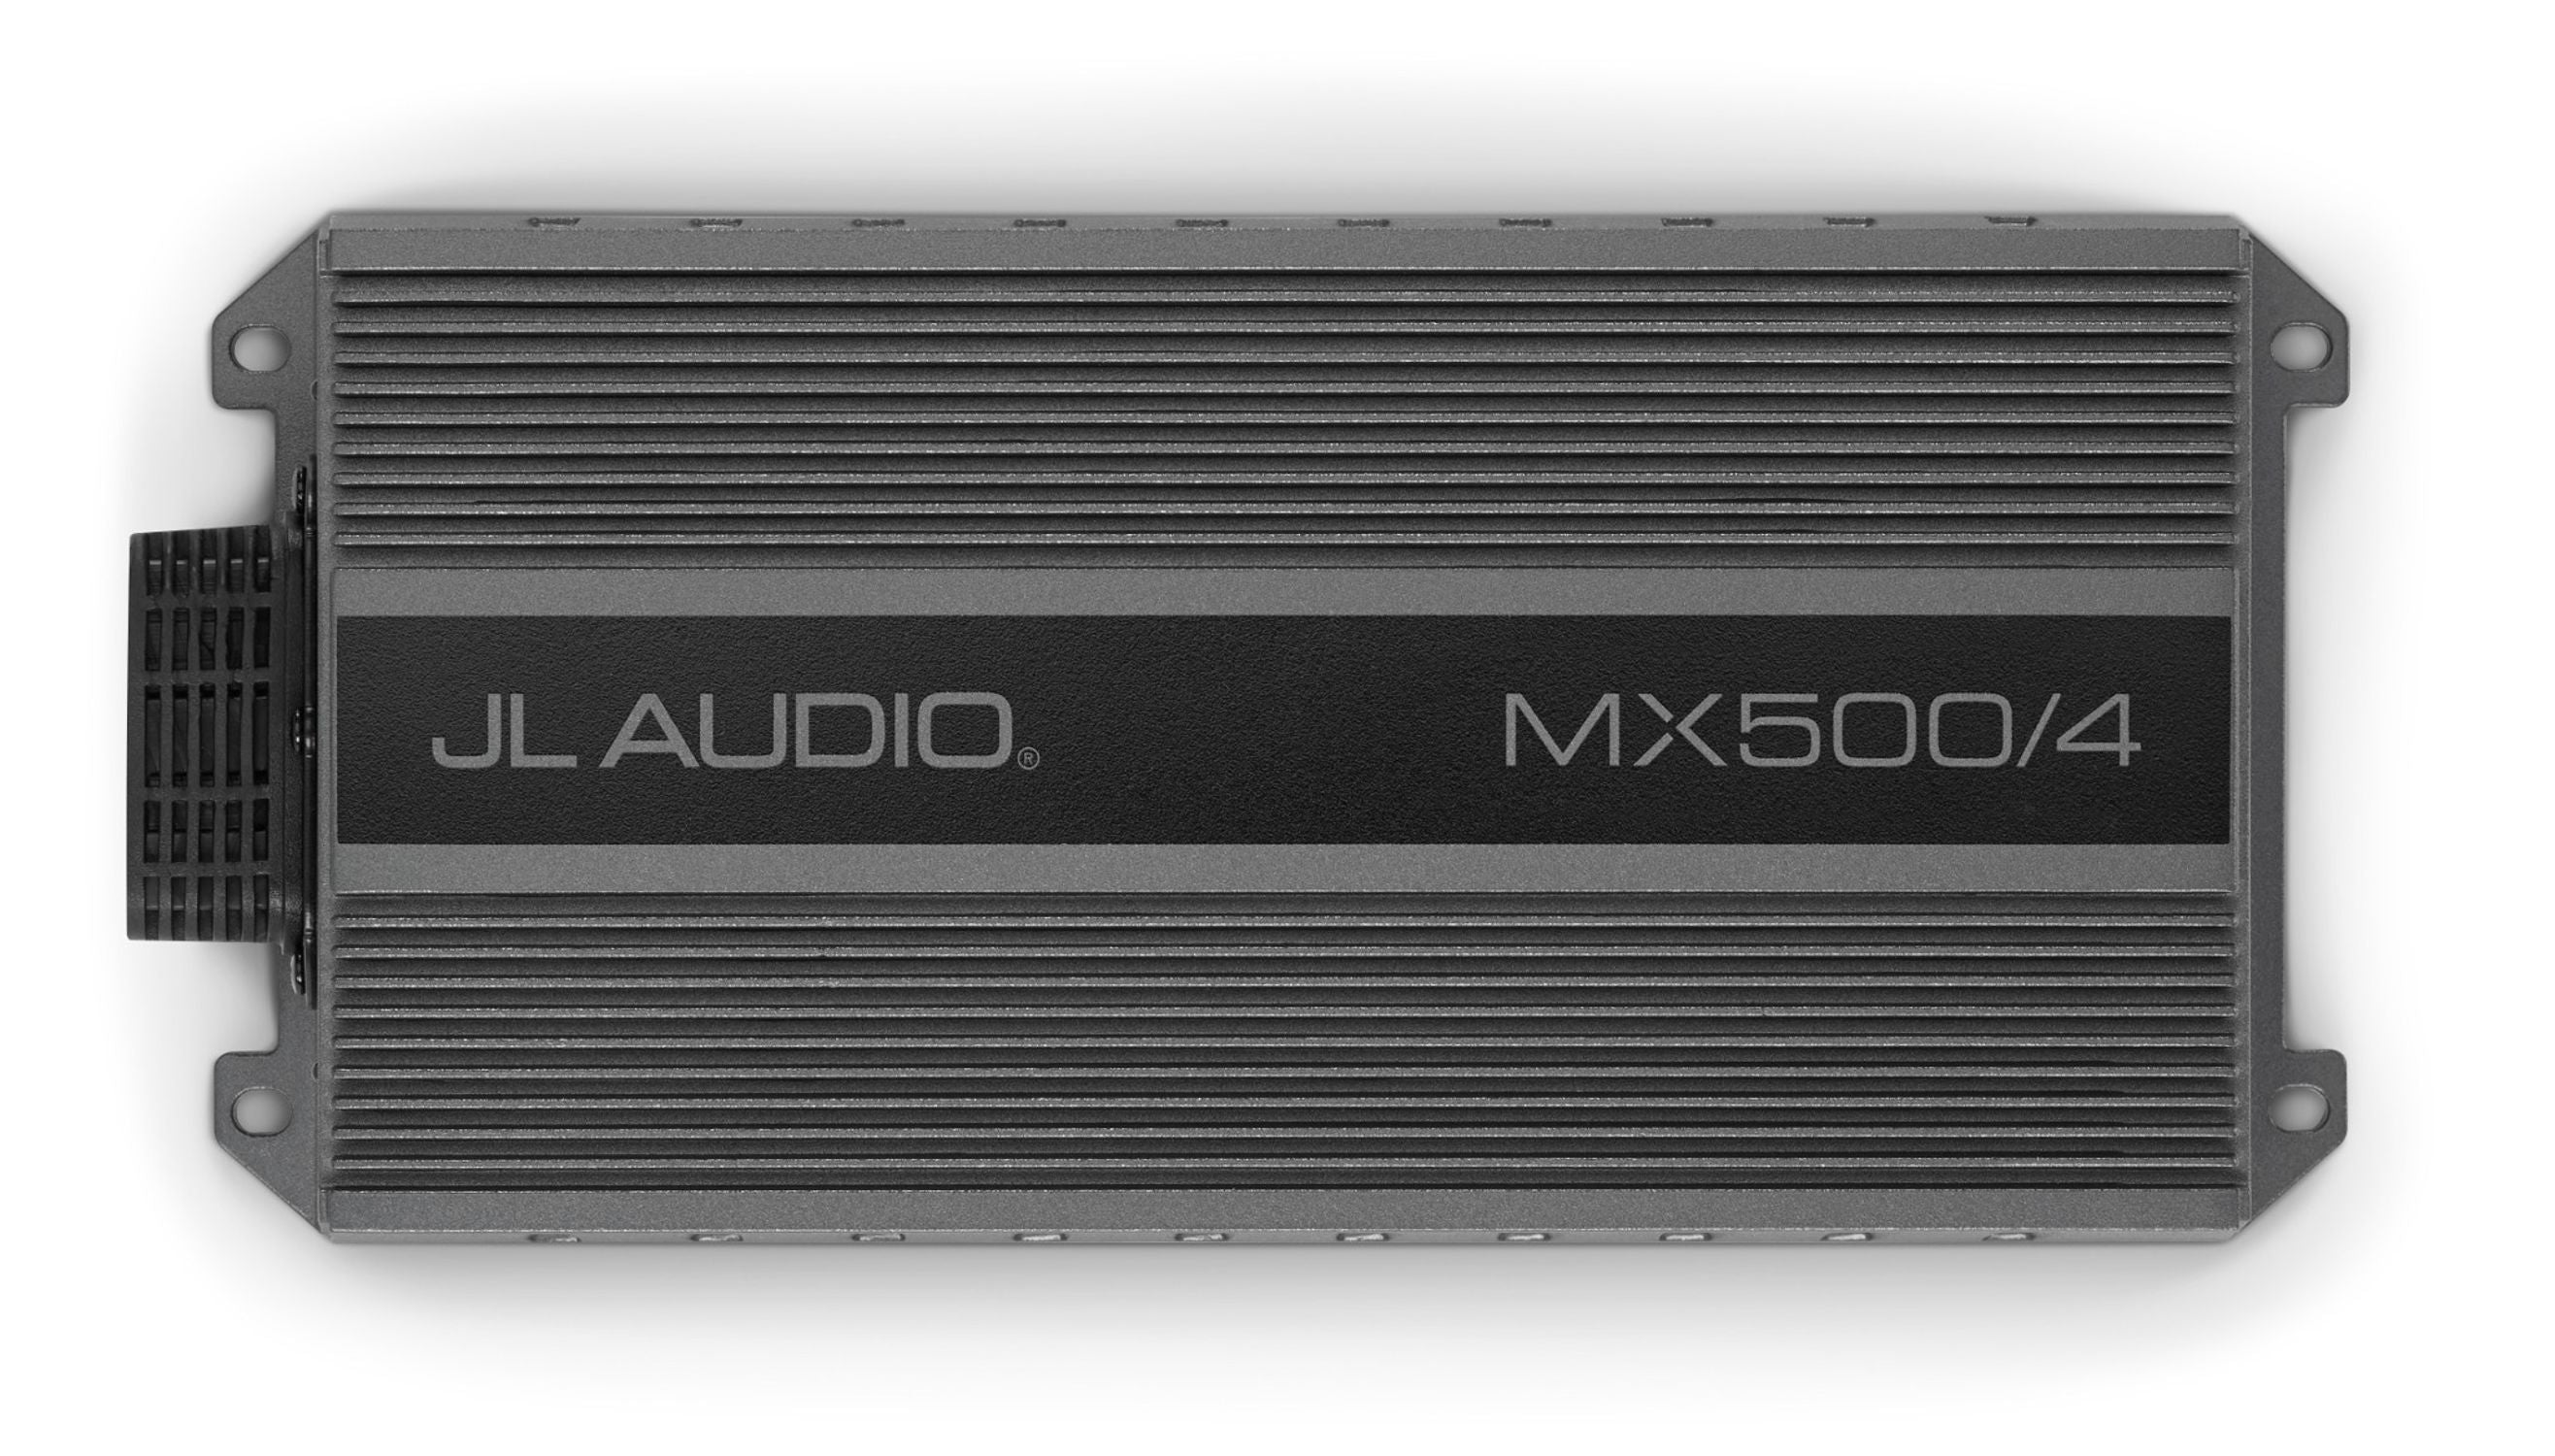 Front Overhead of MX500/4 Amplifier